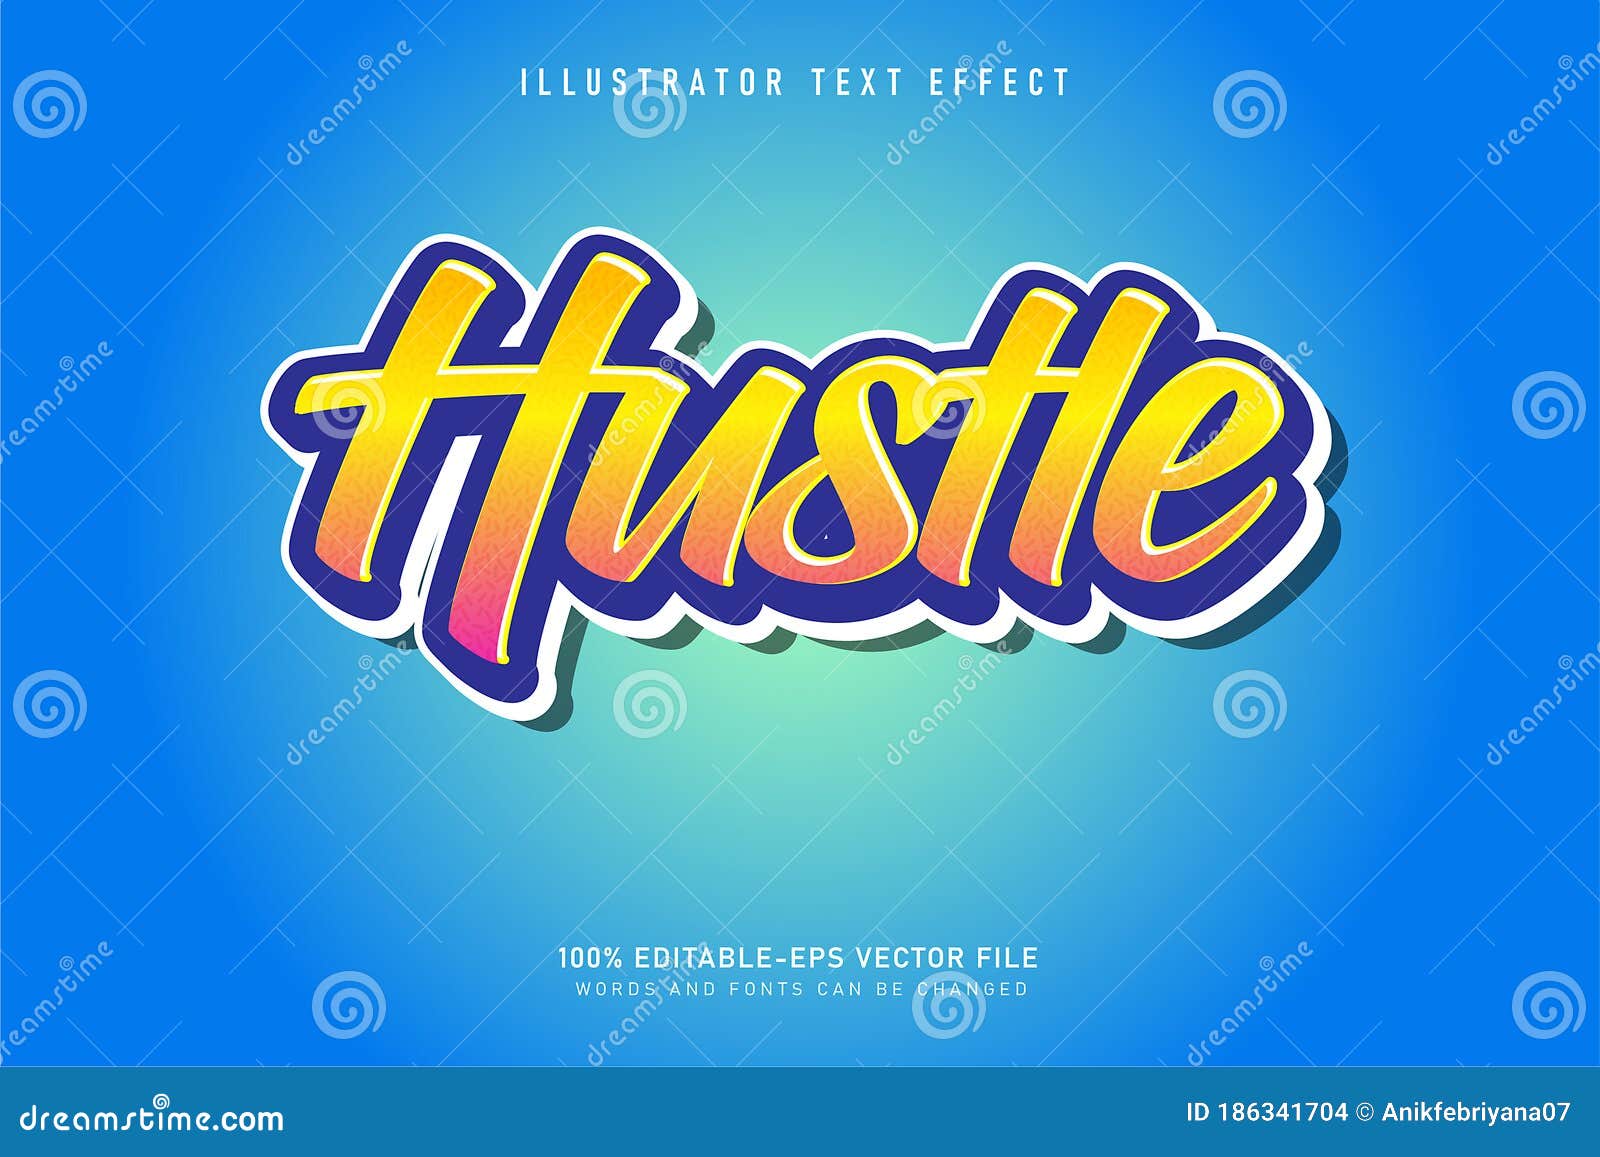 hustle text effect